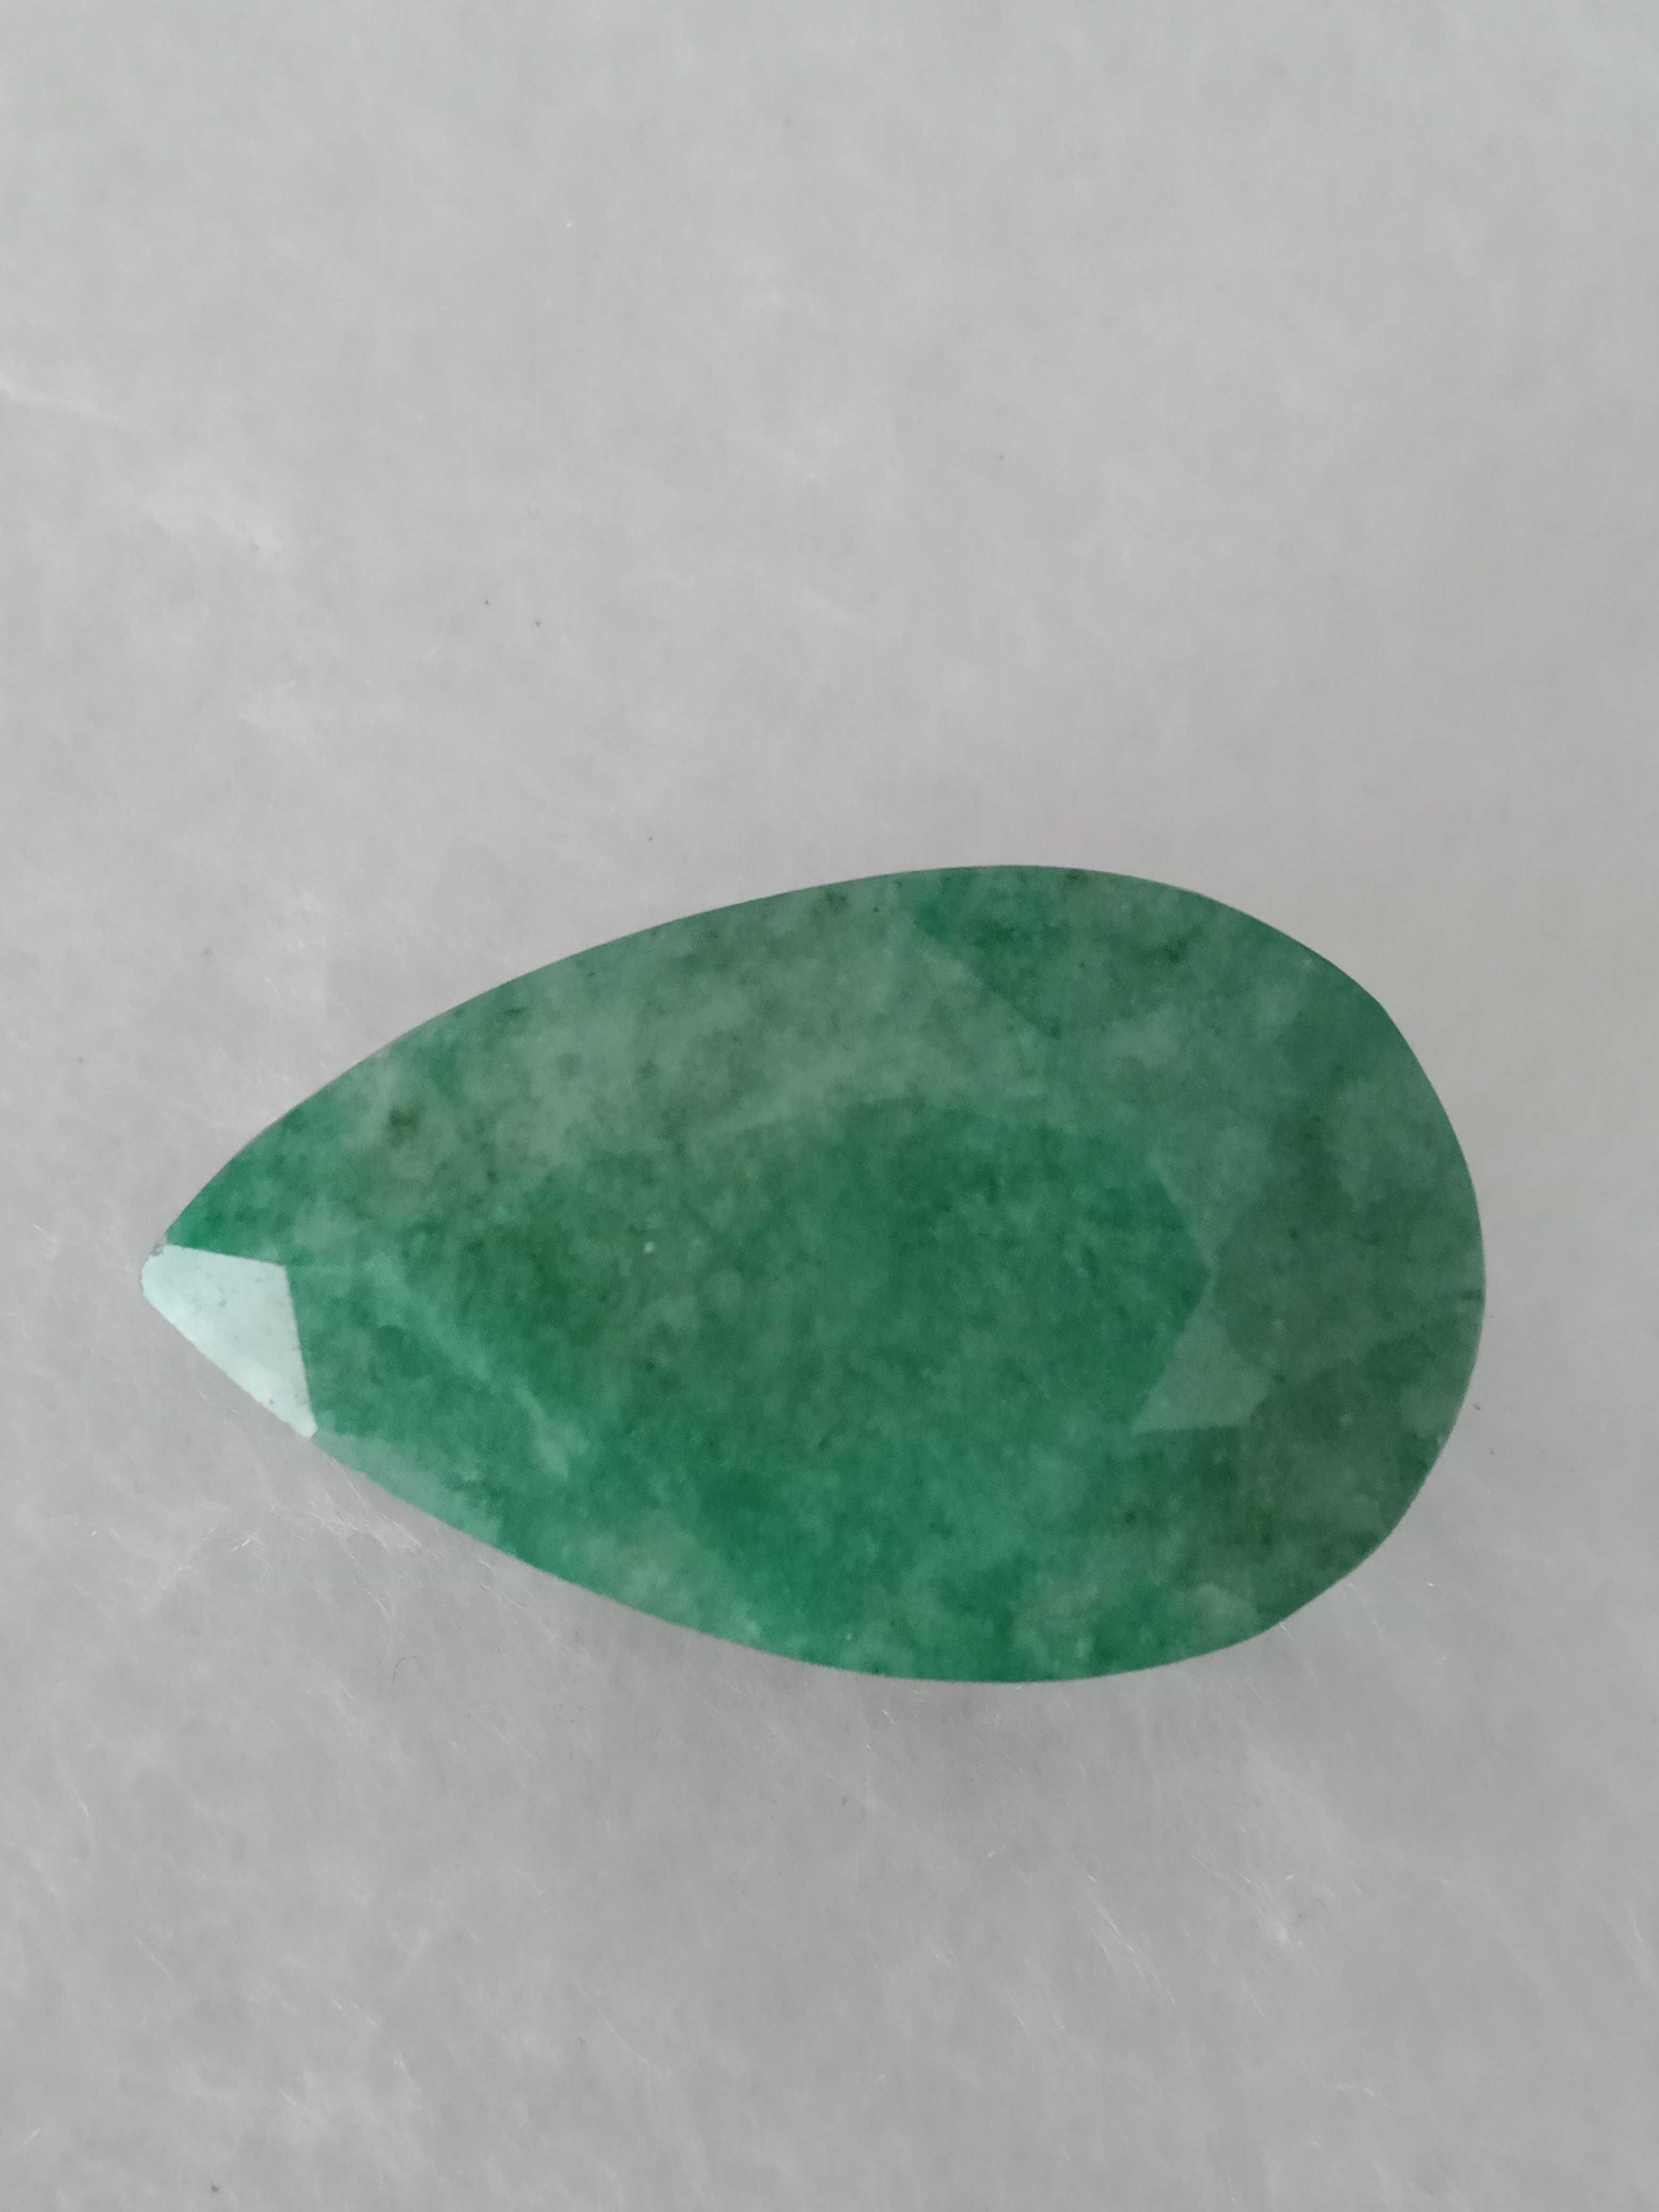 Enorme e bonita esmeralda pedra preciosa natural 123 Cts.Portes grátis